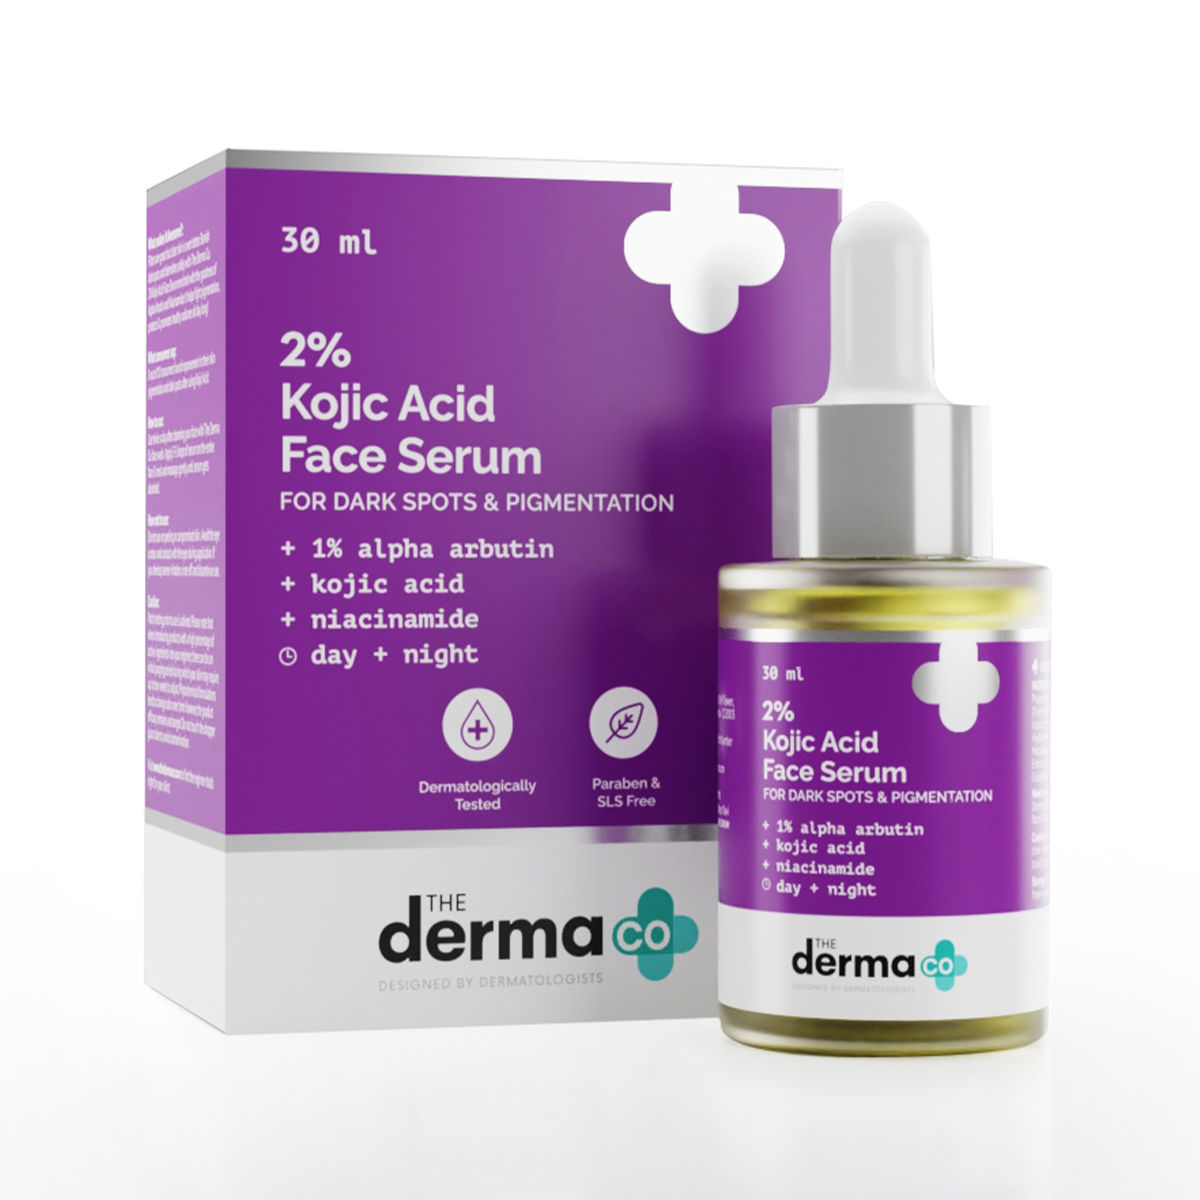 The Derma Co 2 Kojic Acid Face Serum With 1 Alpha Arbutin